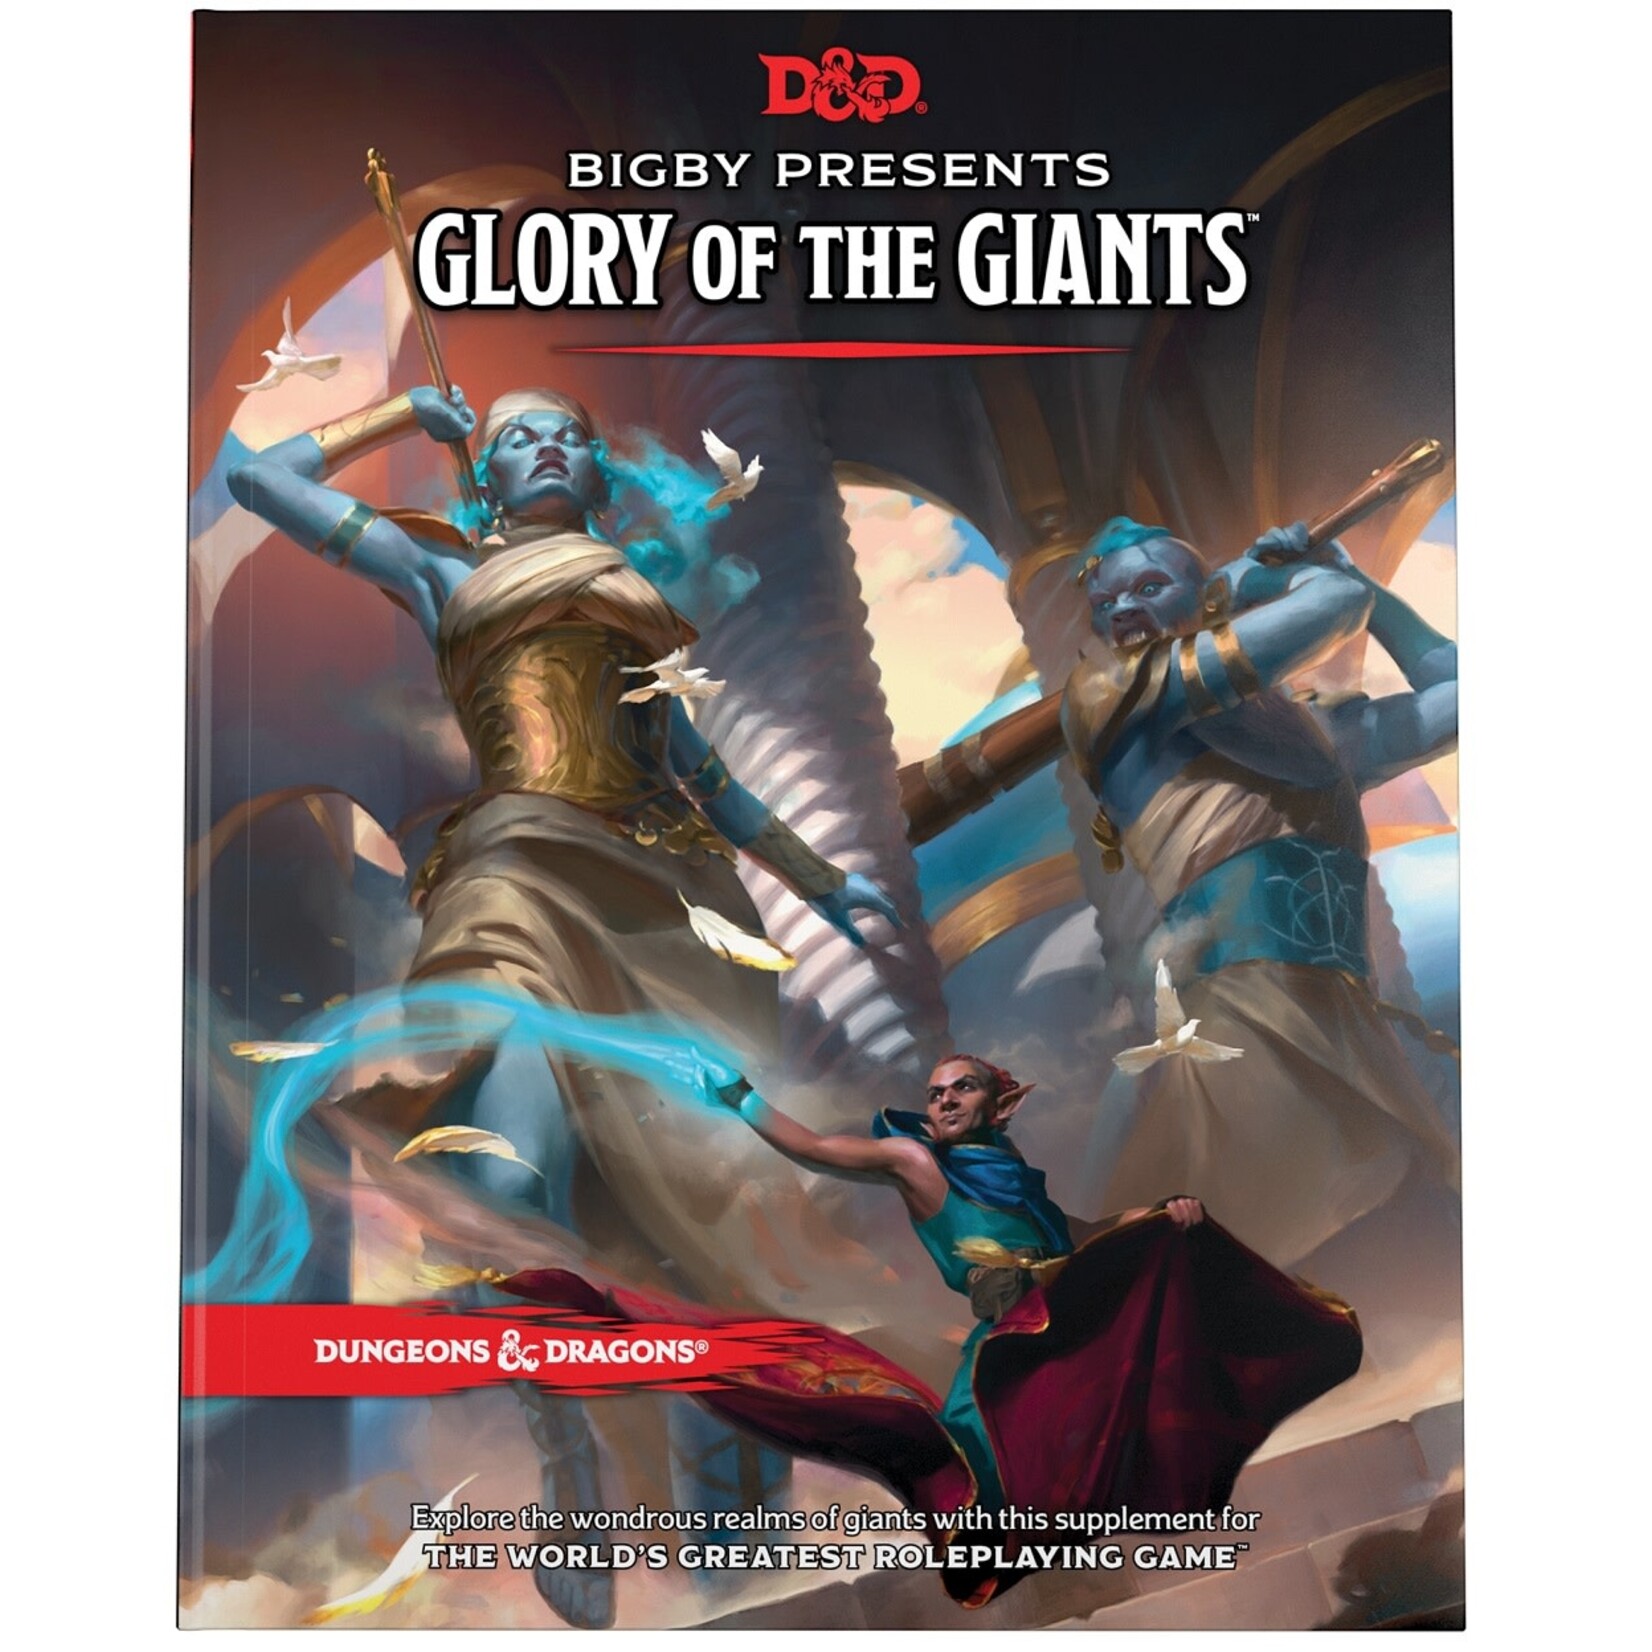 Dungeons & Dragons Livre de règles - Bigby Presents Glory of Giants - Anglais Régulière